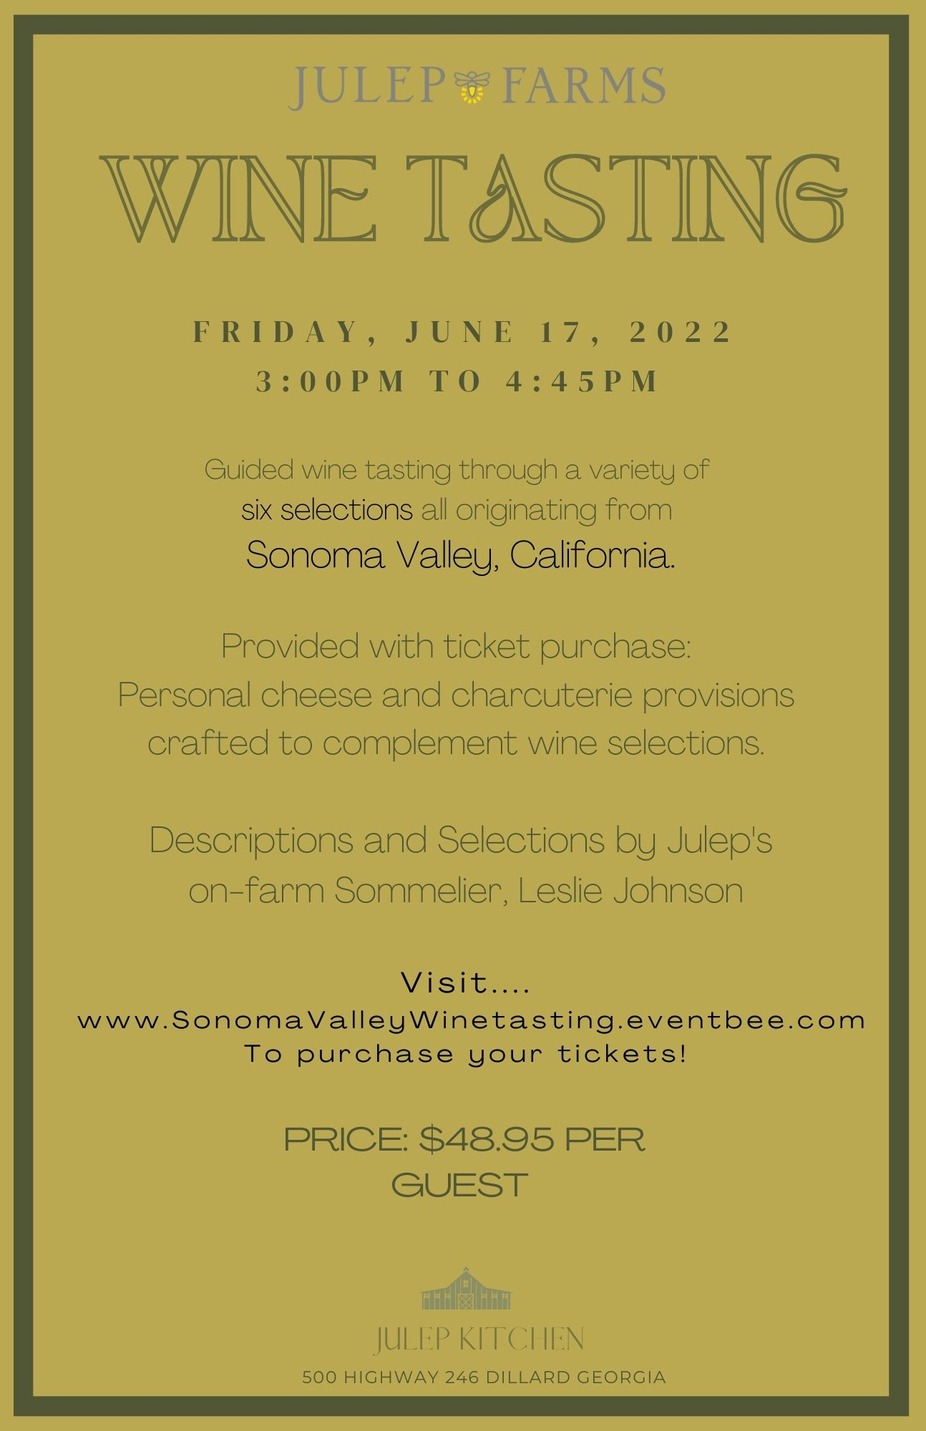 Sonoma Valley Wine Tasting event photo